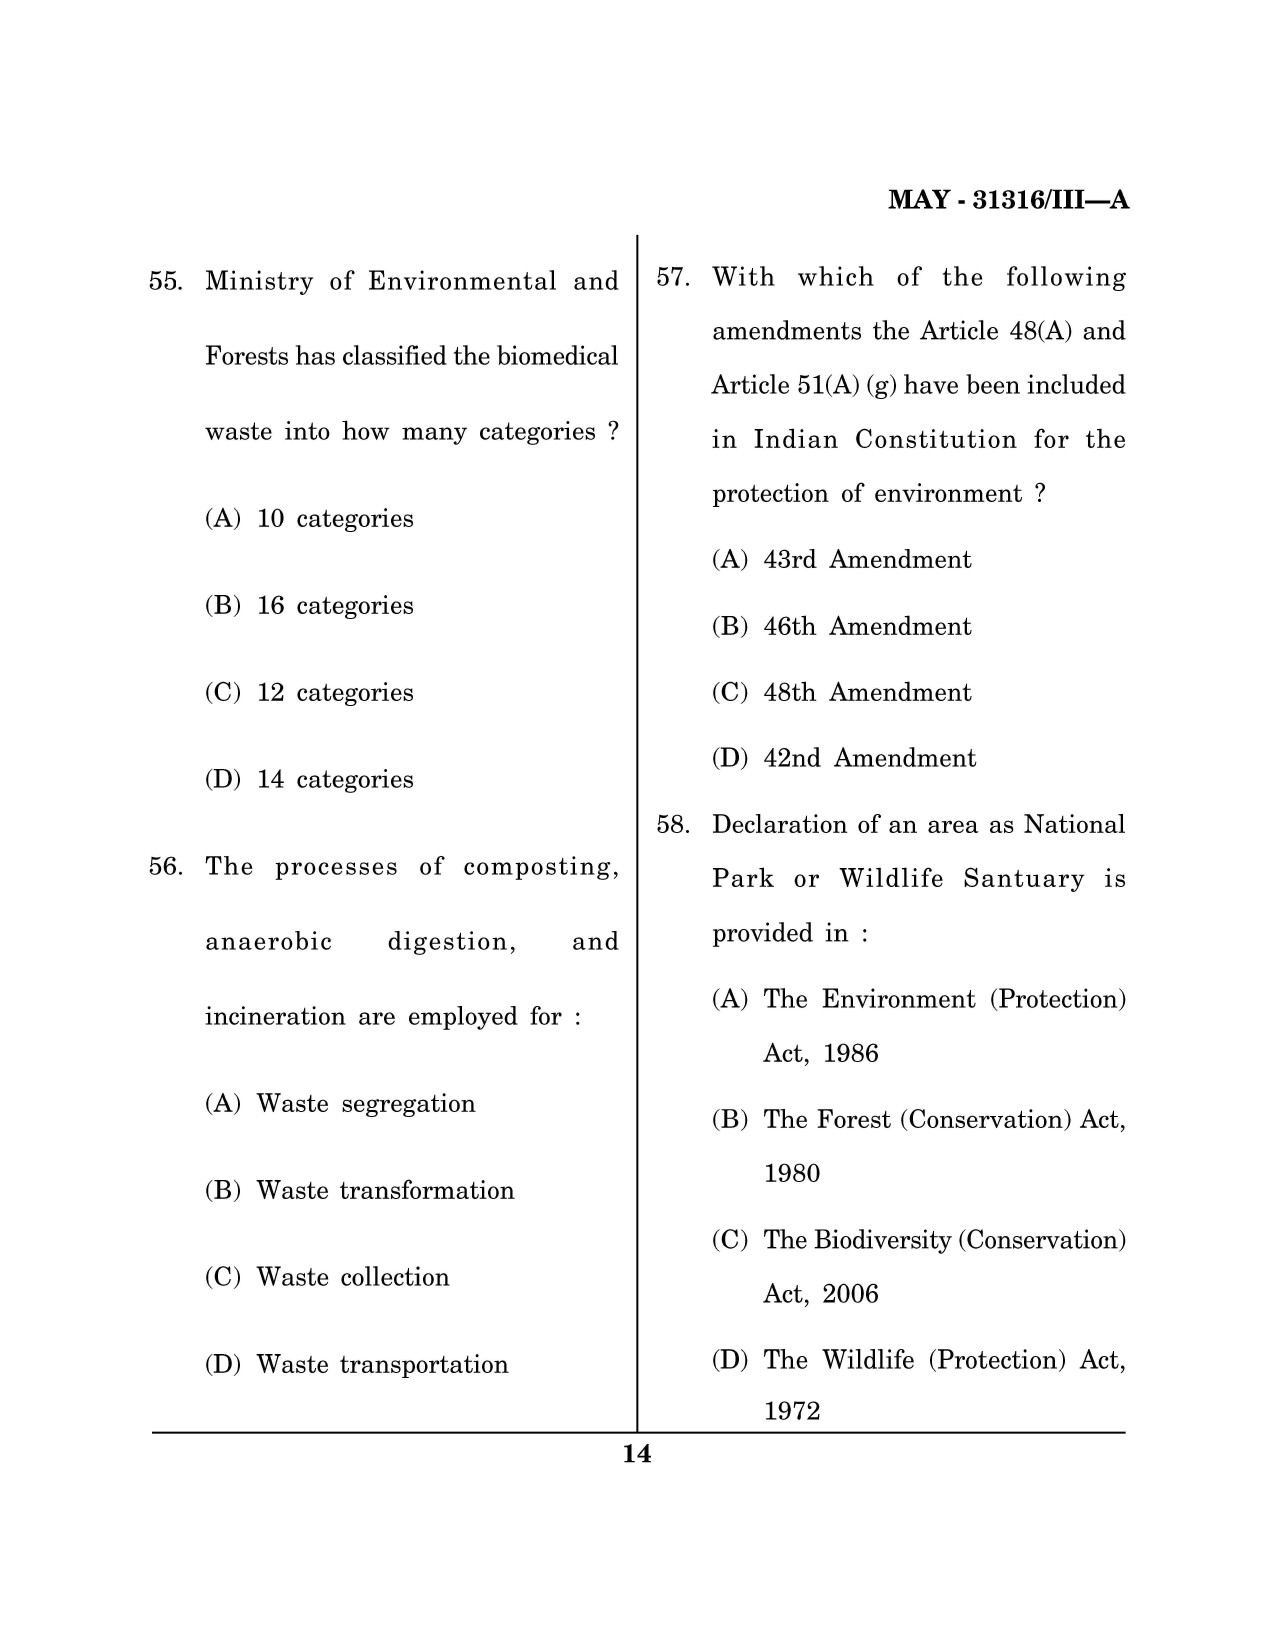 Maharashtra SET Environmental Sciences Question Paper III May 2016 13